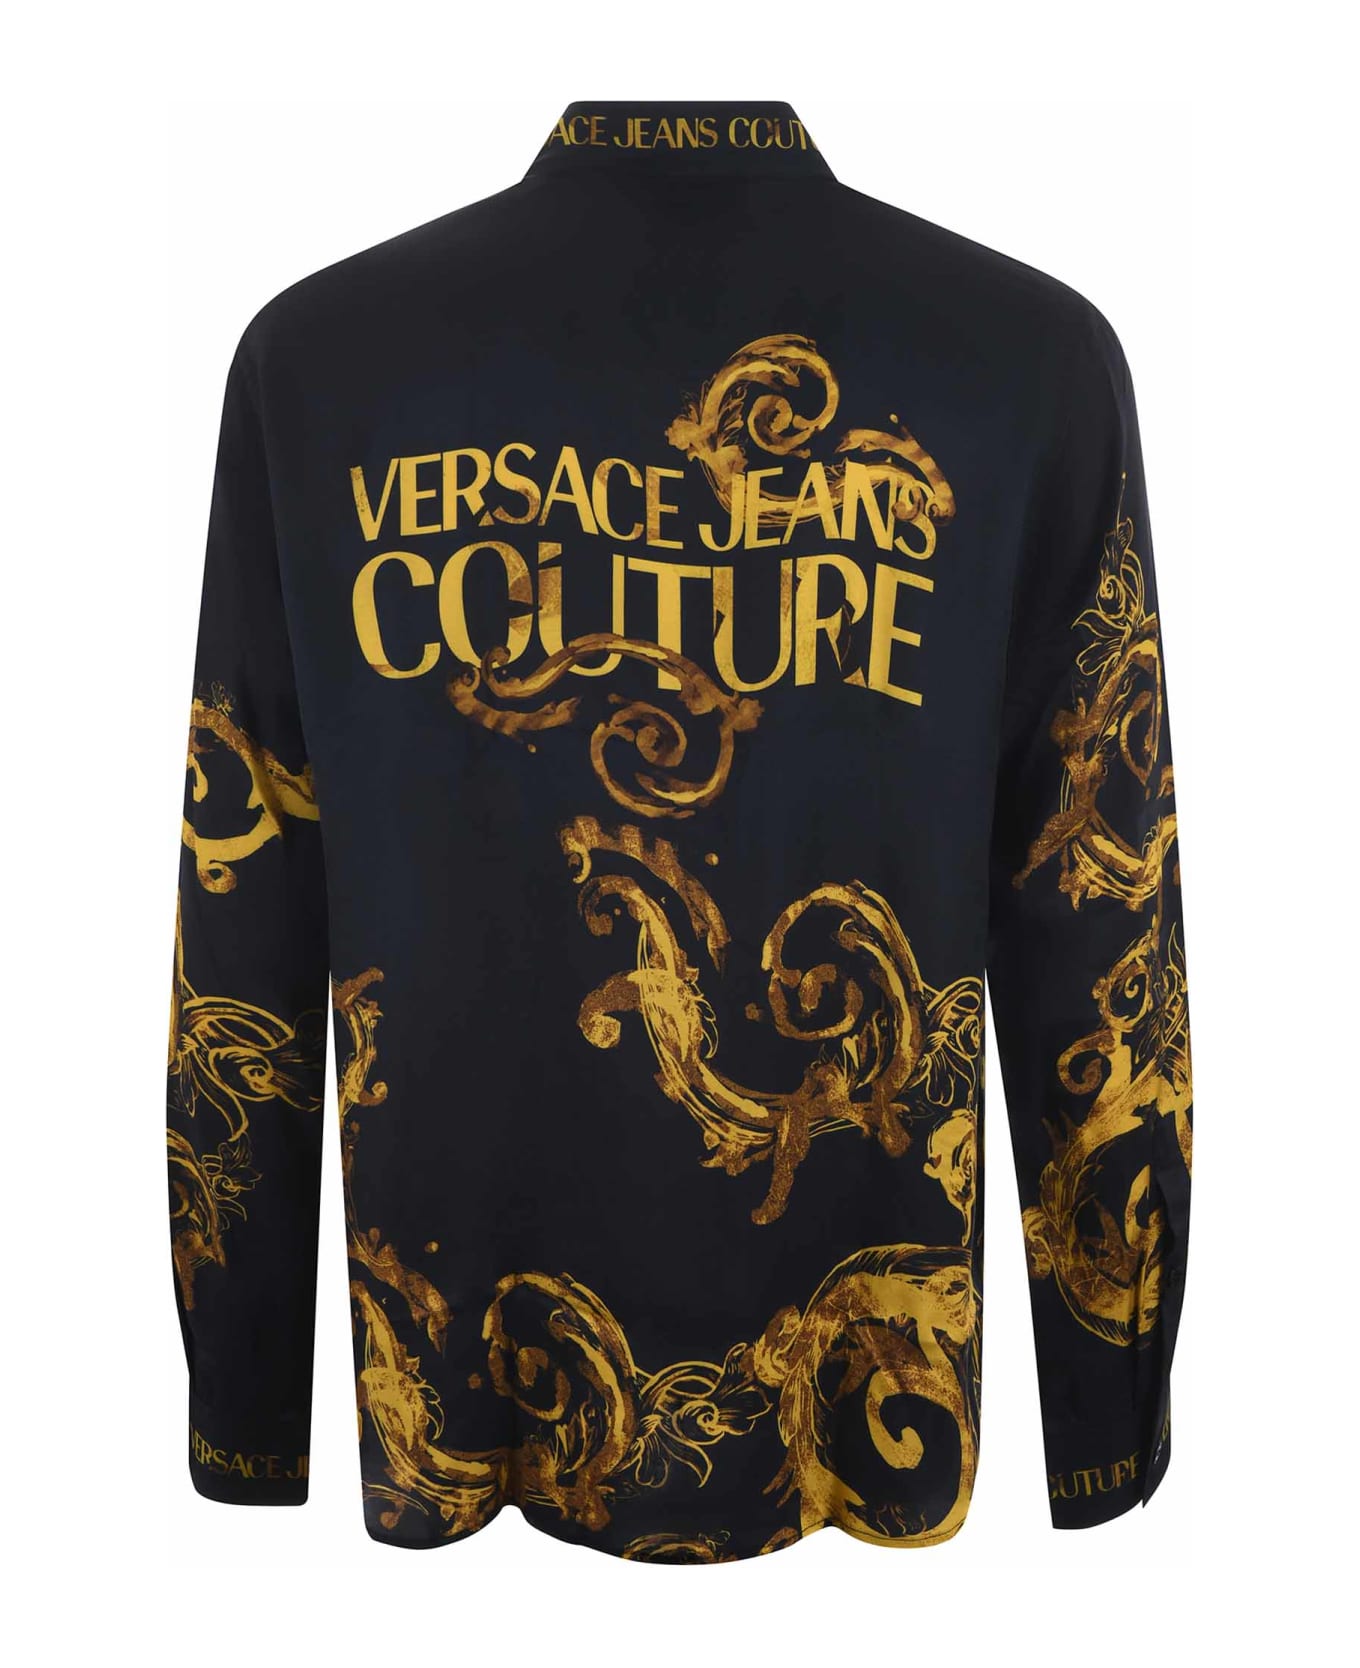 Versace Jeans Couture Baroque Shirt - Nero/oro シャツ